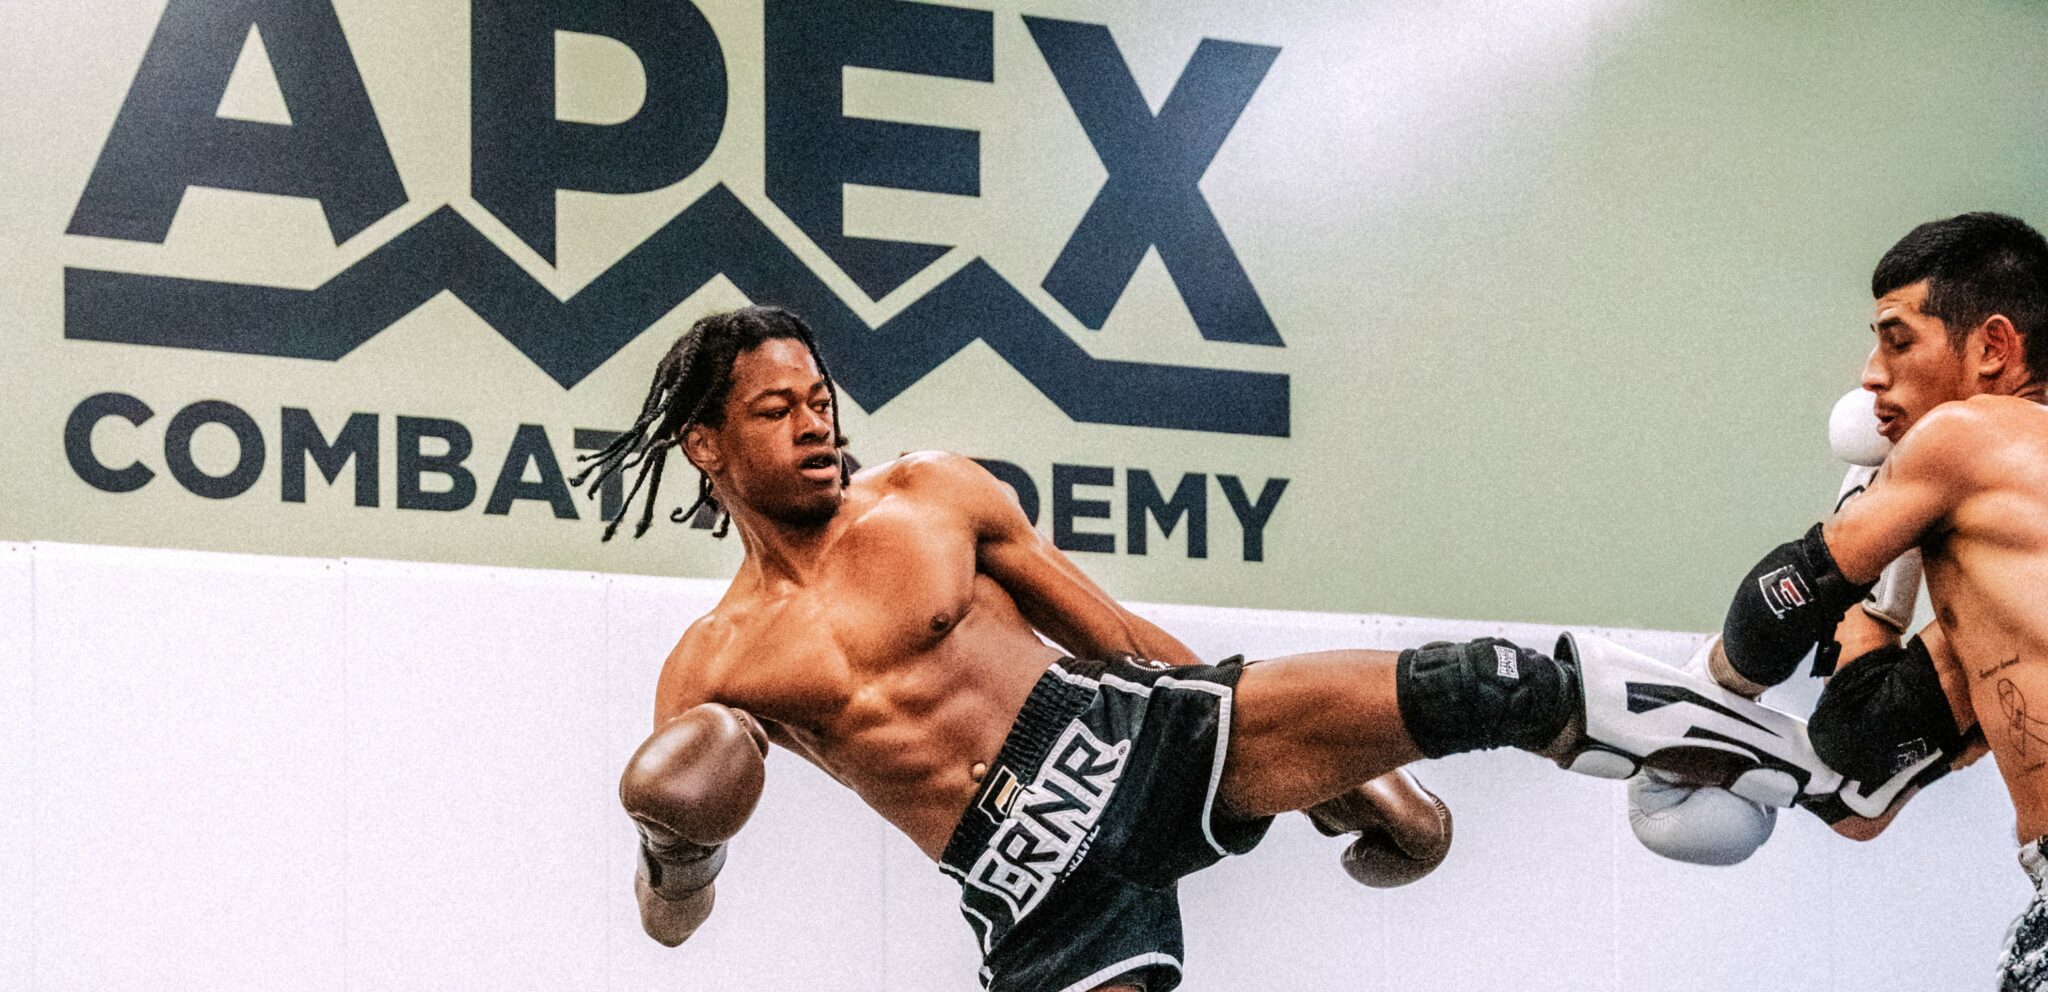 Apex Combat Academy Muay Thai Kickboxing